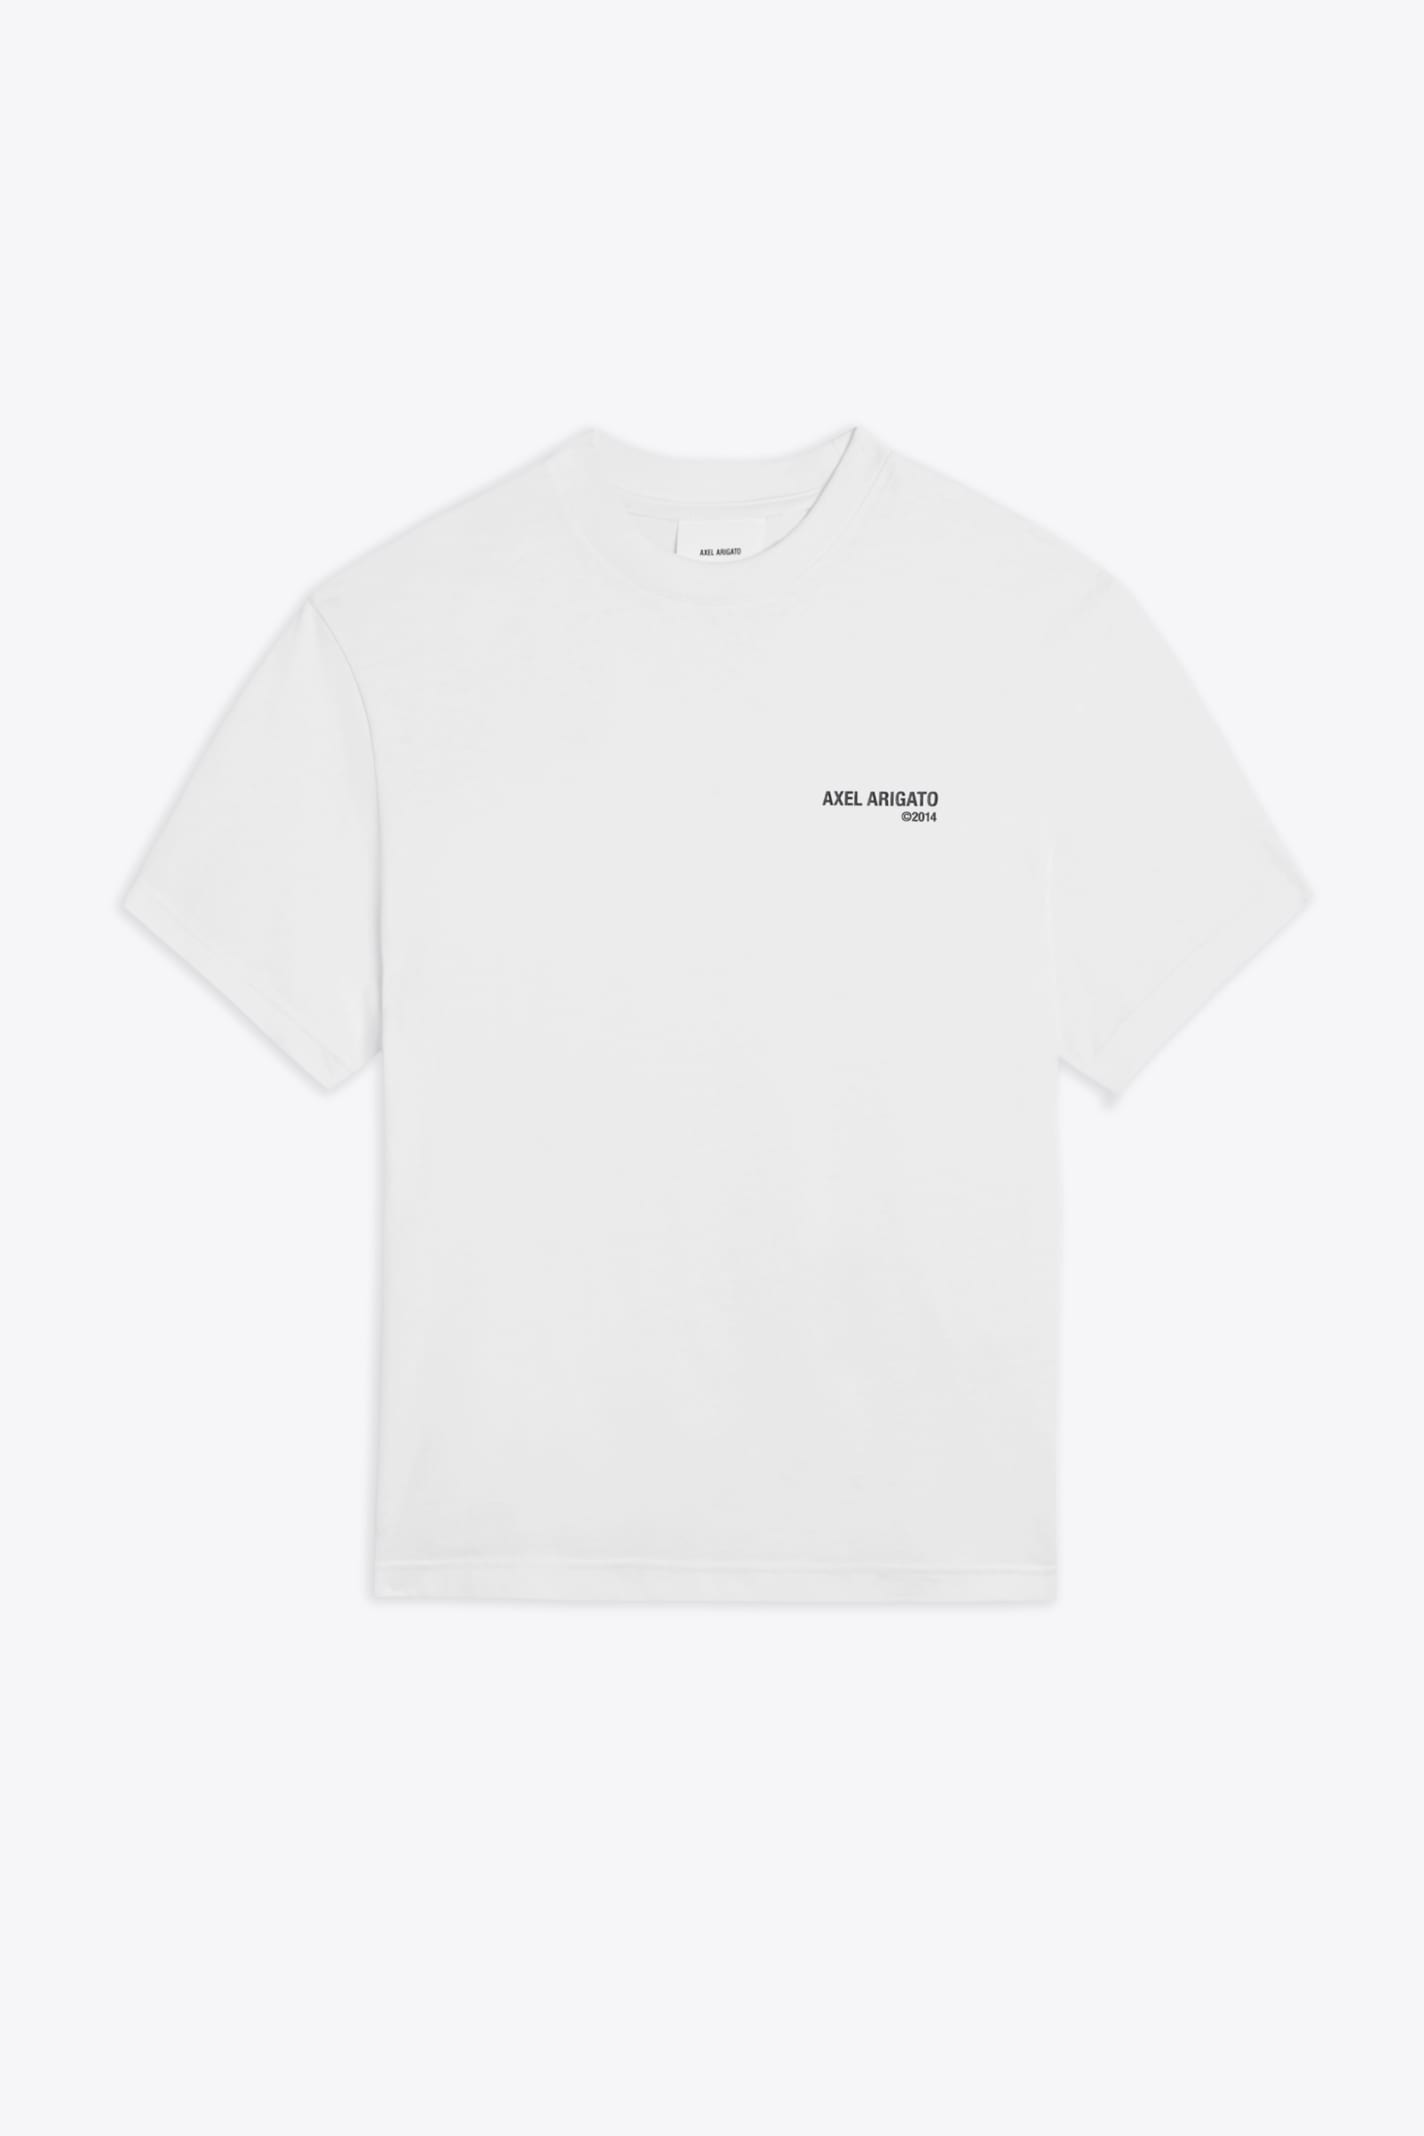 Legacy T-shirt White cotton t-shirt with chest logo - Legacy t-shirt